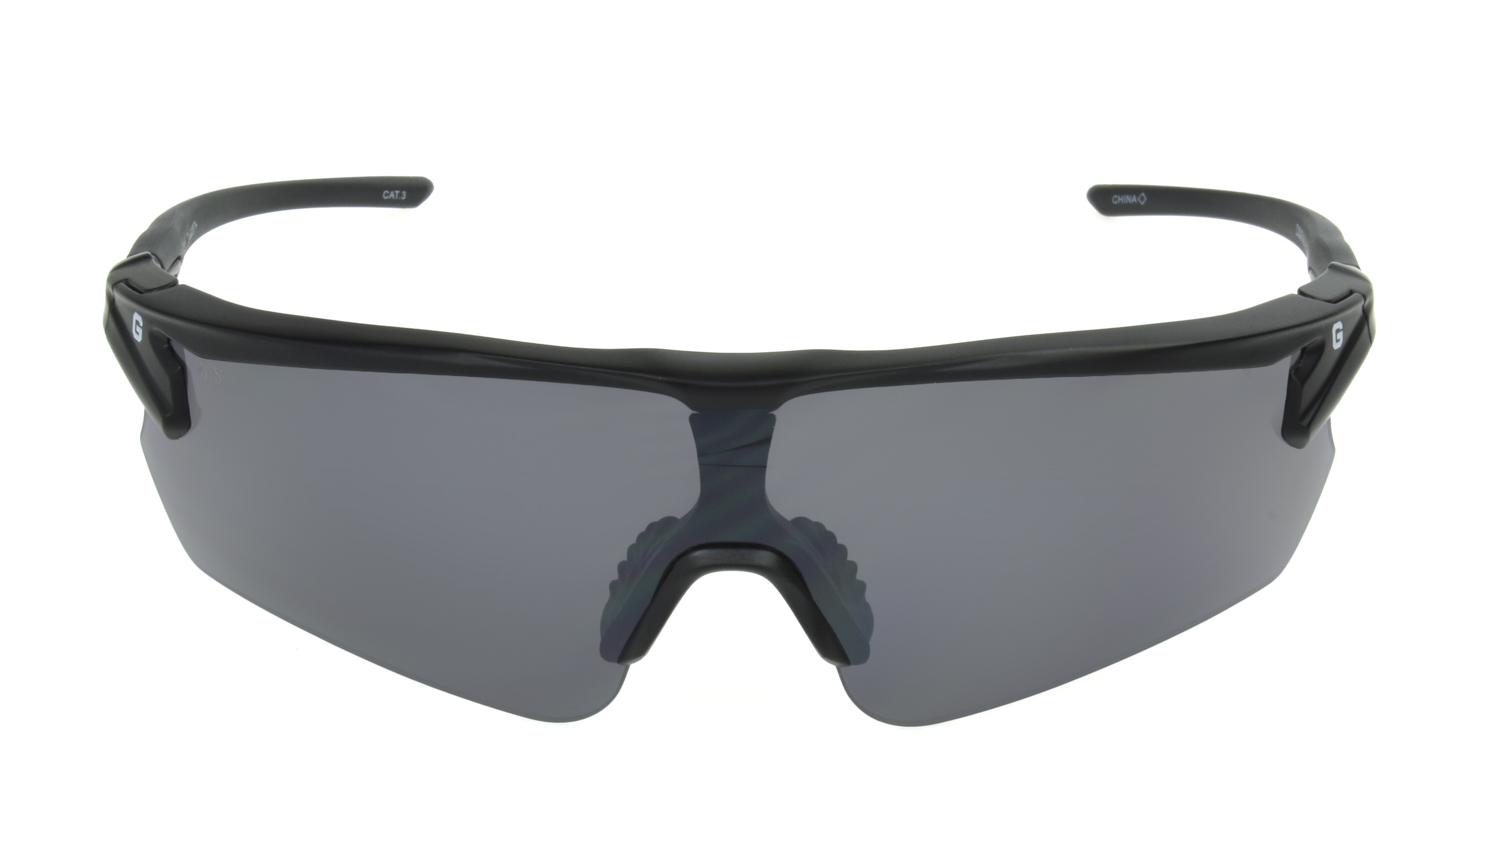 GUARDIAN Men's Black Shield Sunglasses VV02 - image 2 of 3